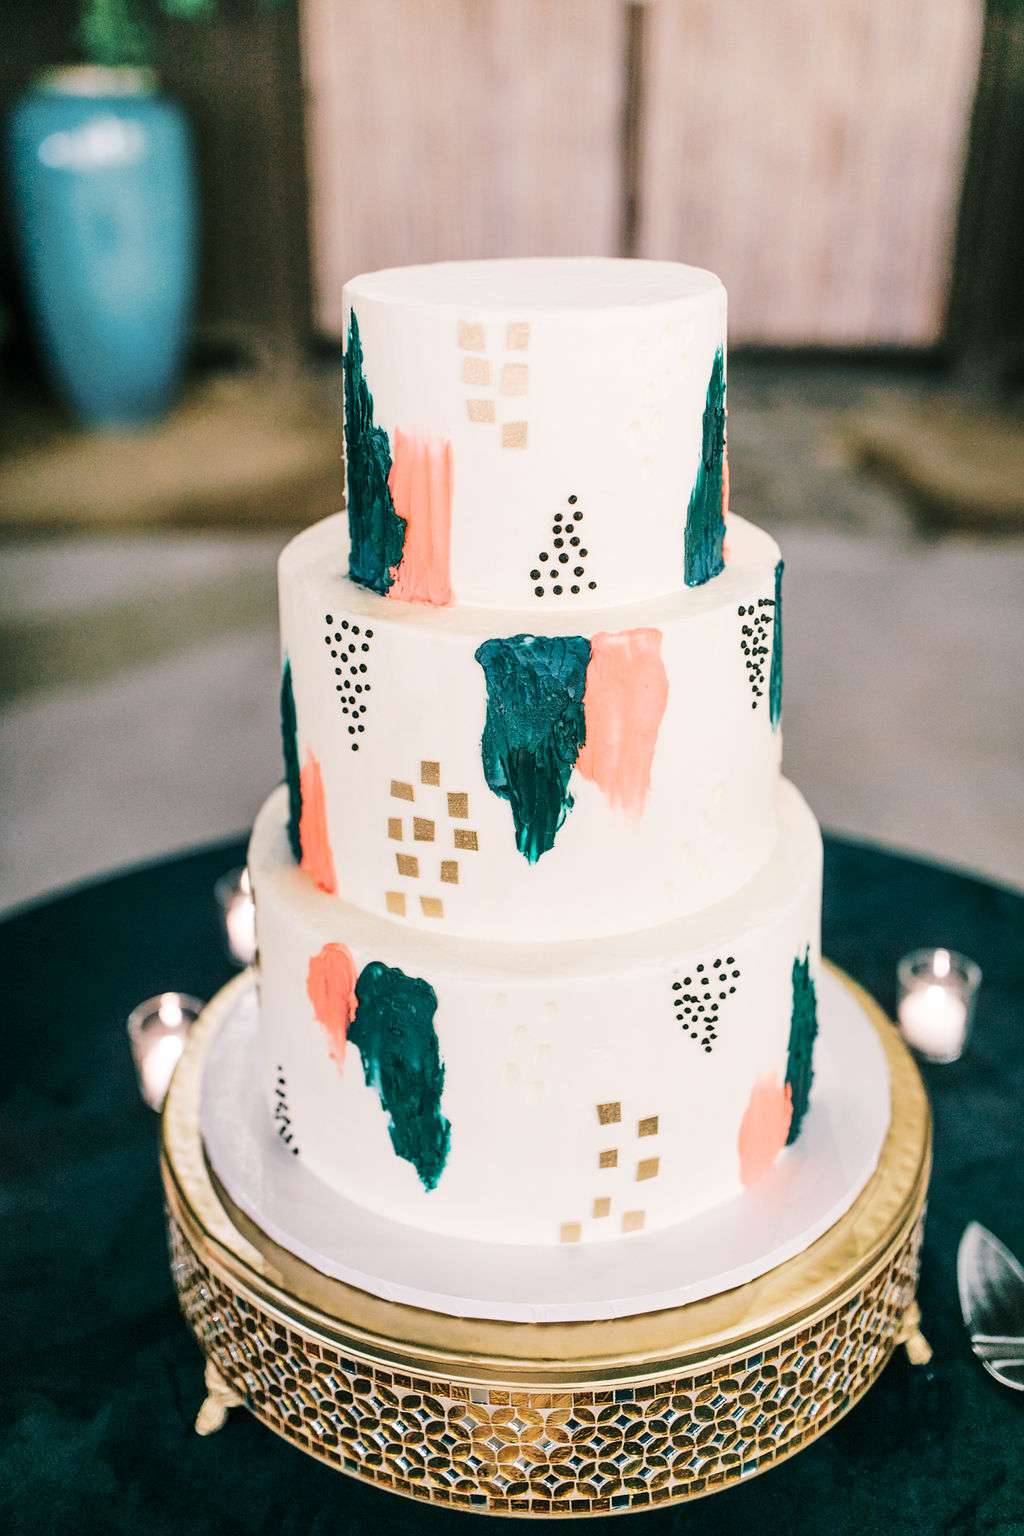 A One-of-a-Kind Wedding Cake